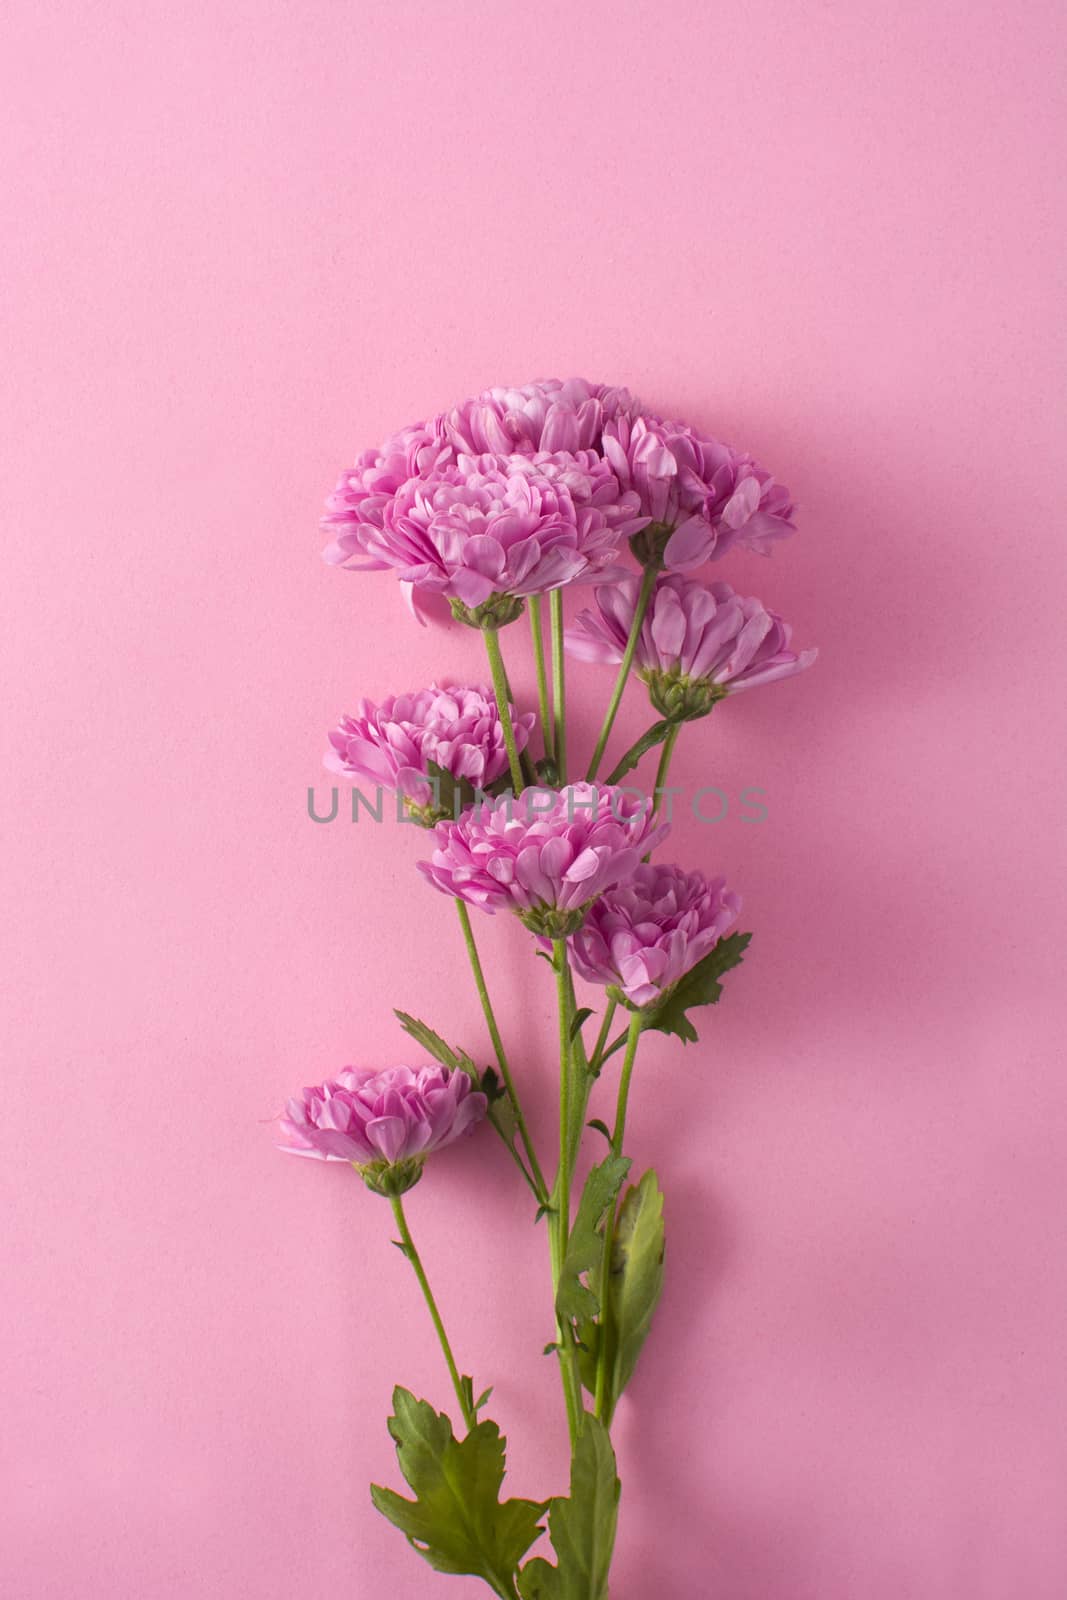 Purple chrysanthemum and petals by chandlervid85